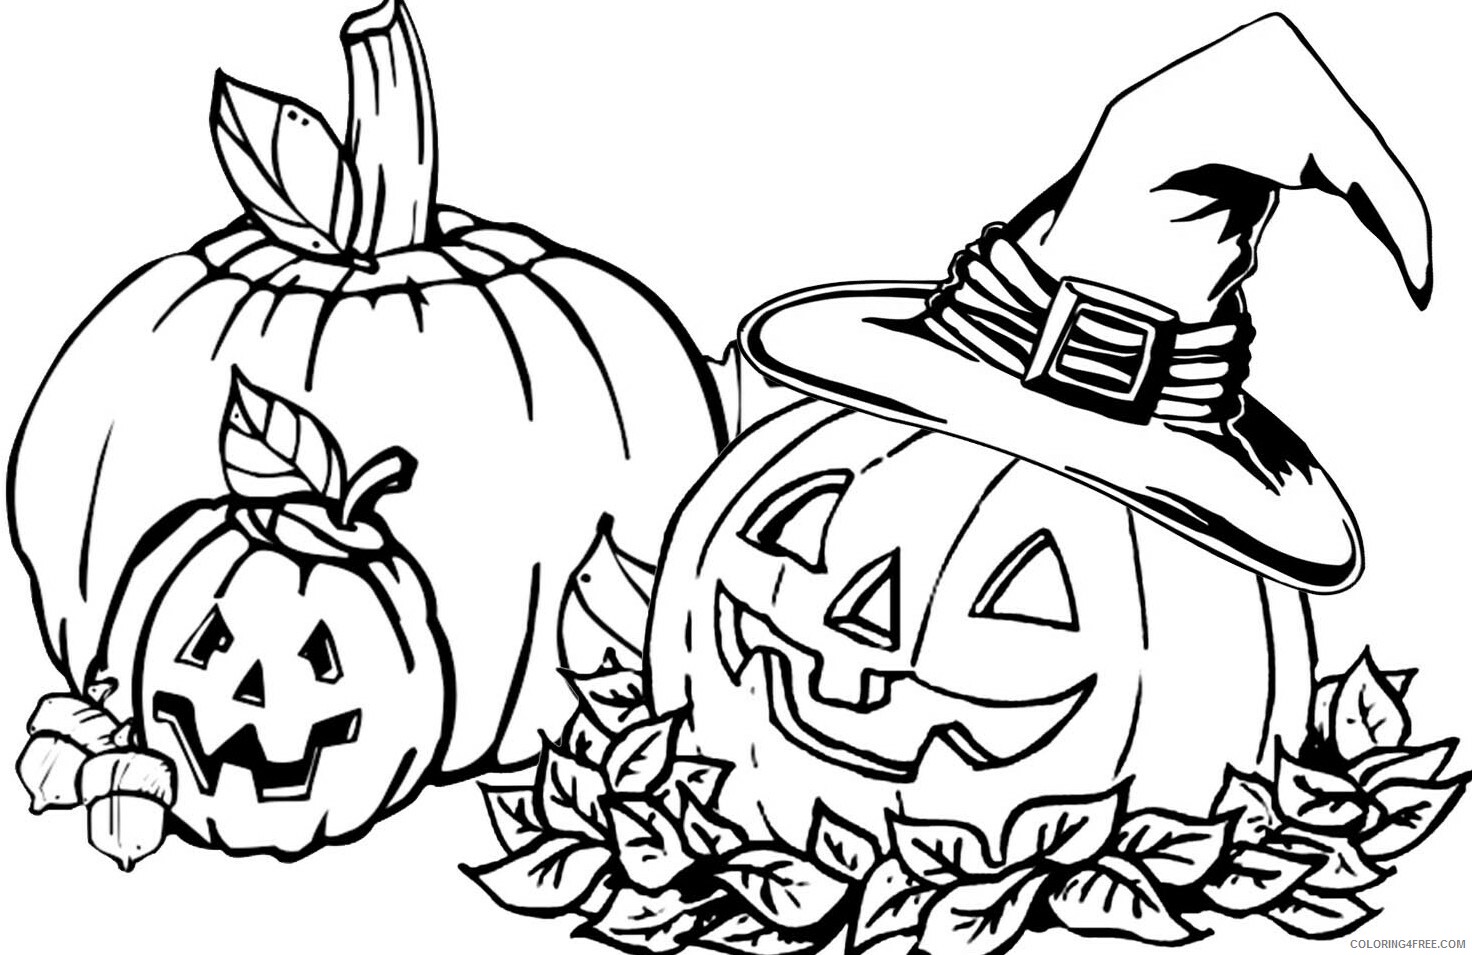 Pumpkin Coloring Pages Vegetables Food Halloween Pumpkin Sheets Kids Print 2021 Coloring4free